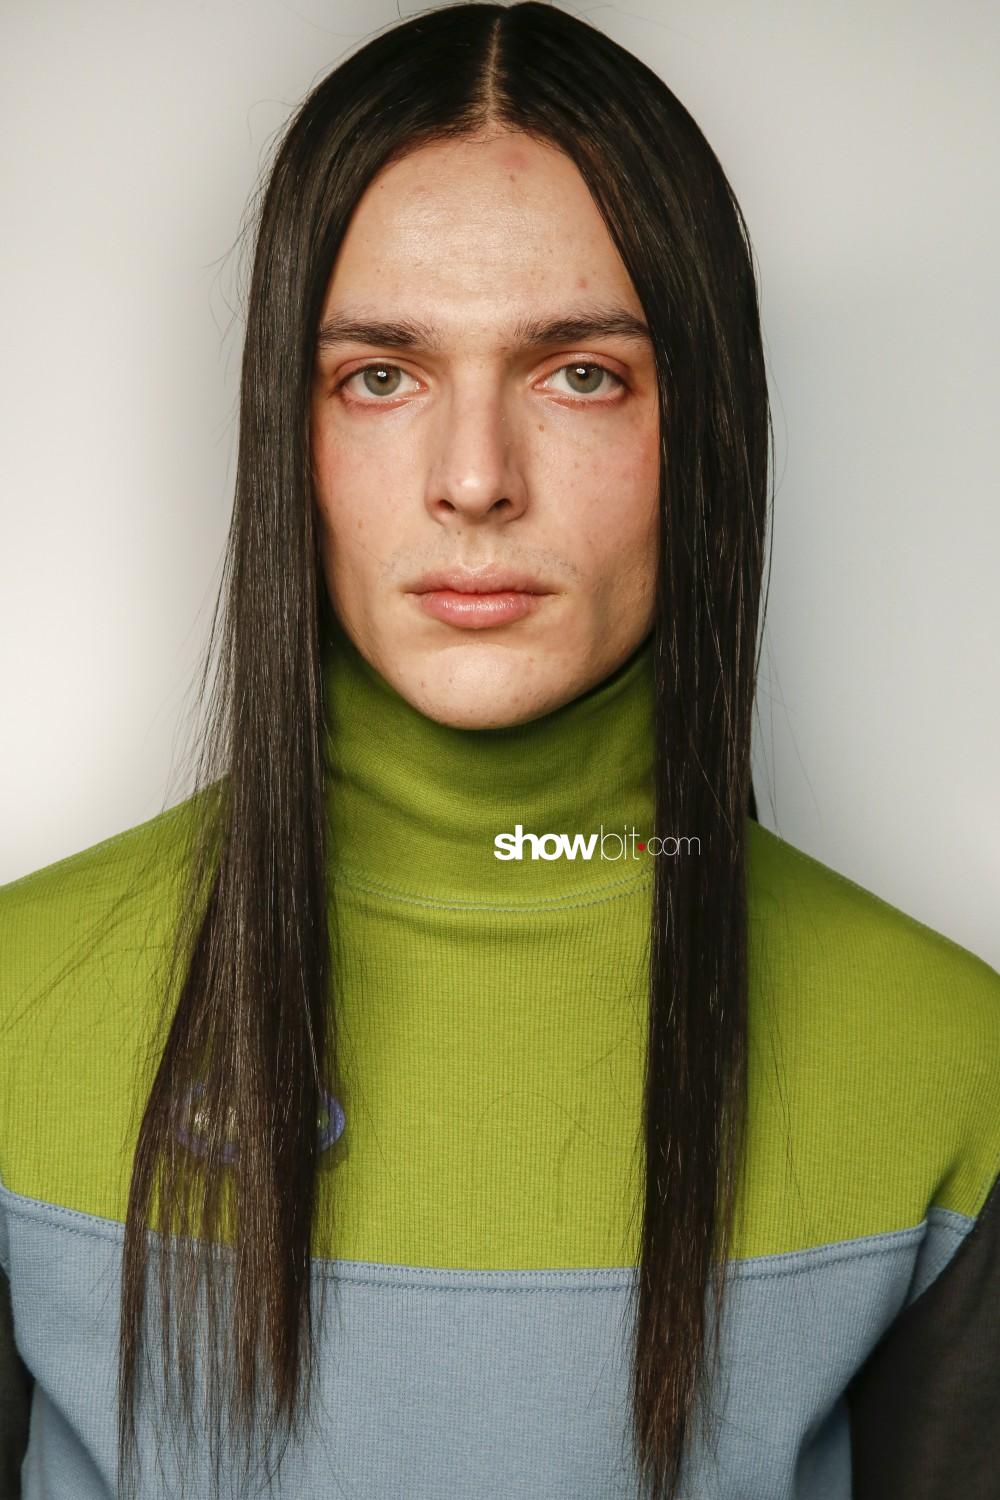 New York Fashion Week: Men's Beauty in images - ShowBit